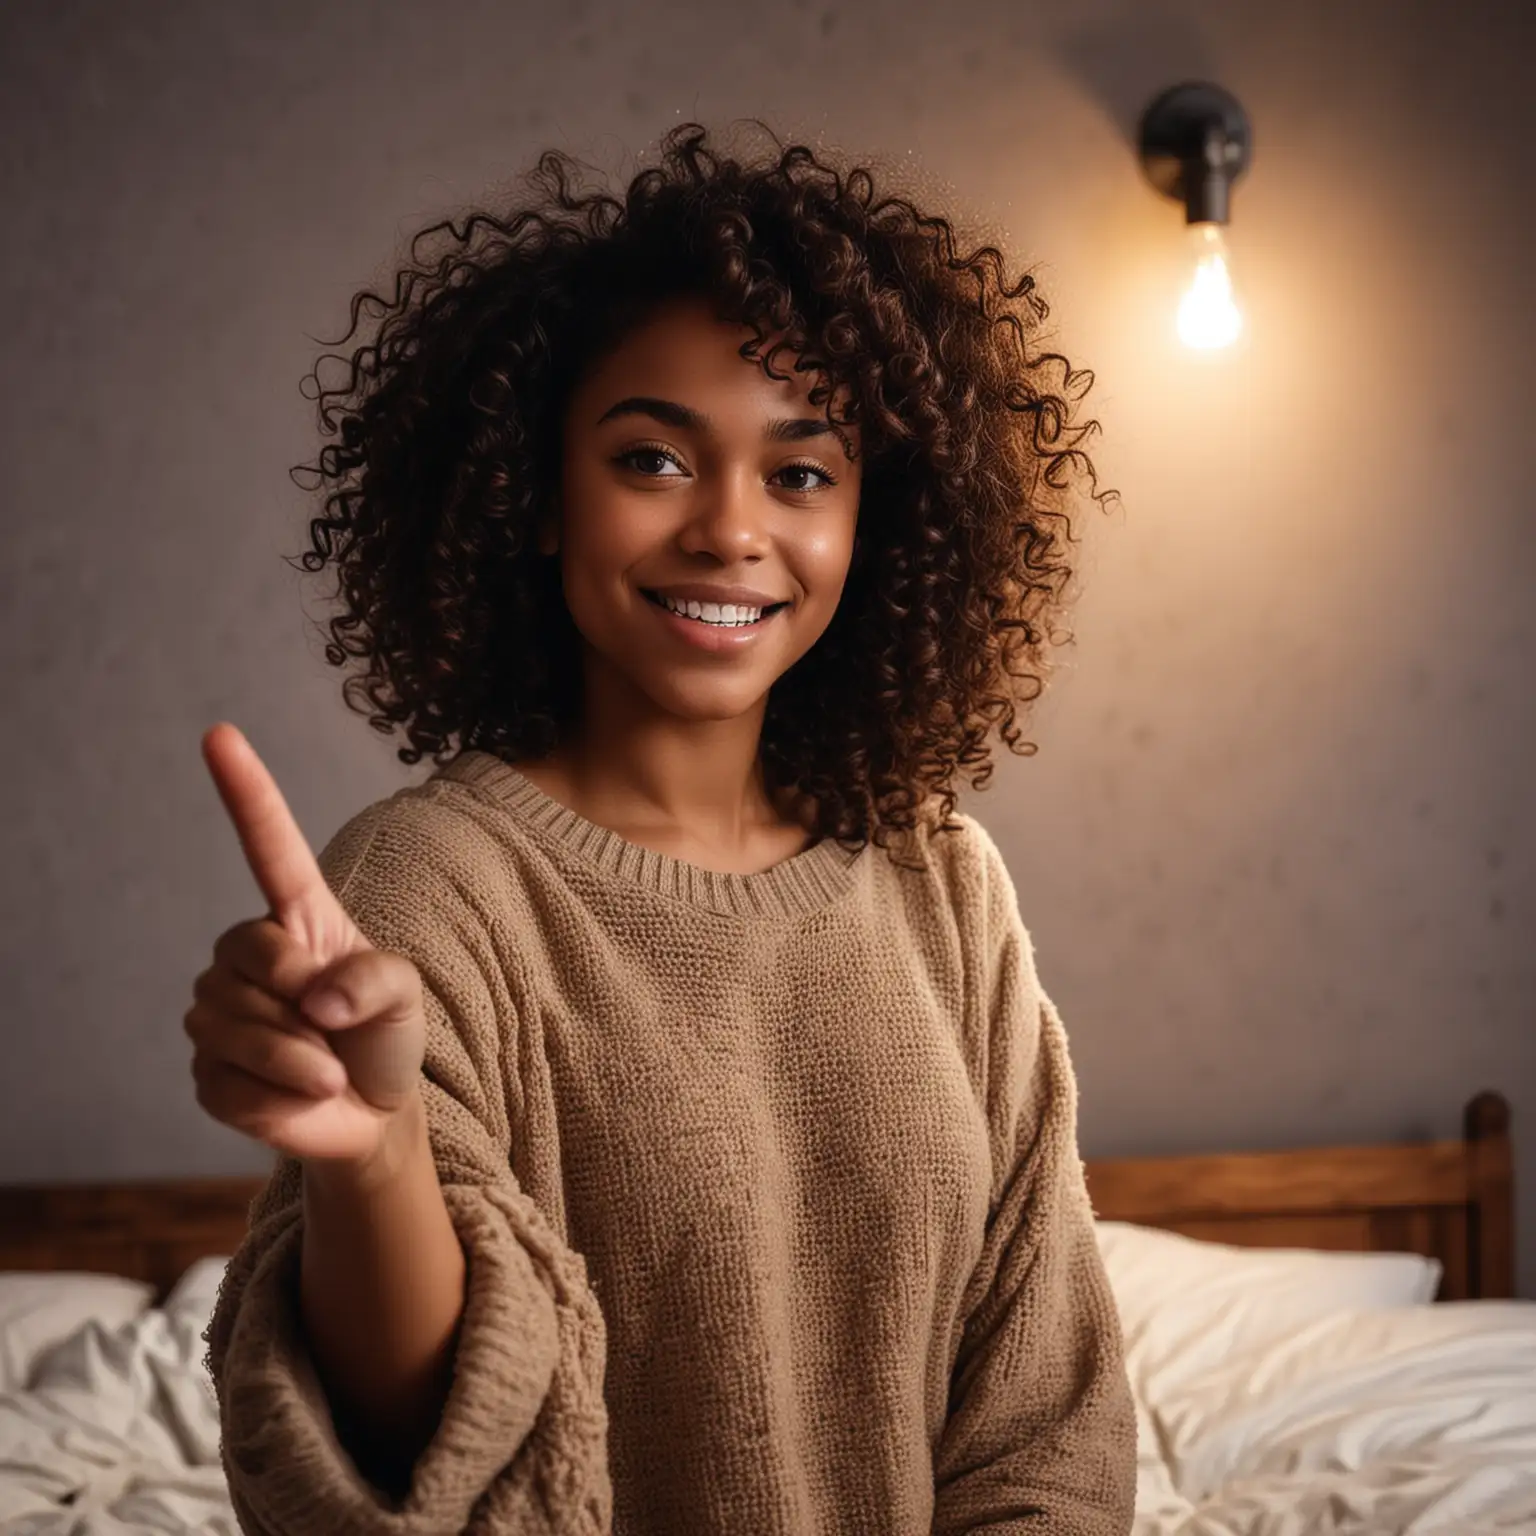 Joyful Black Girl in Cozy Room Pointing Happily